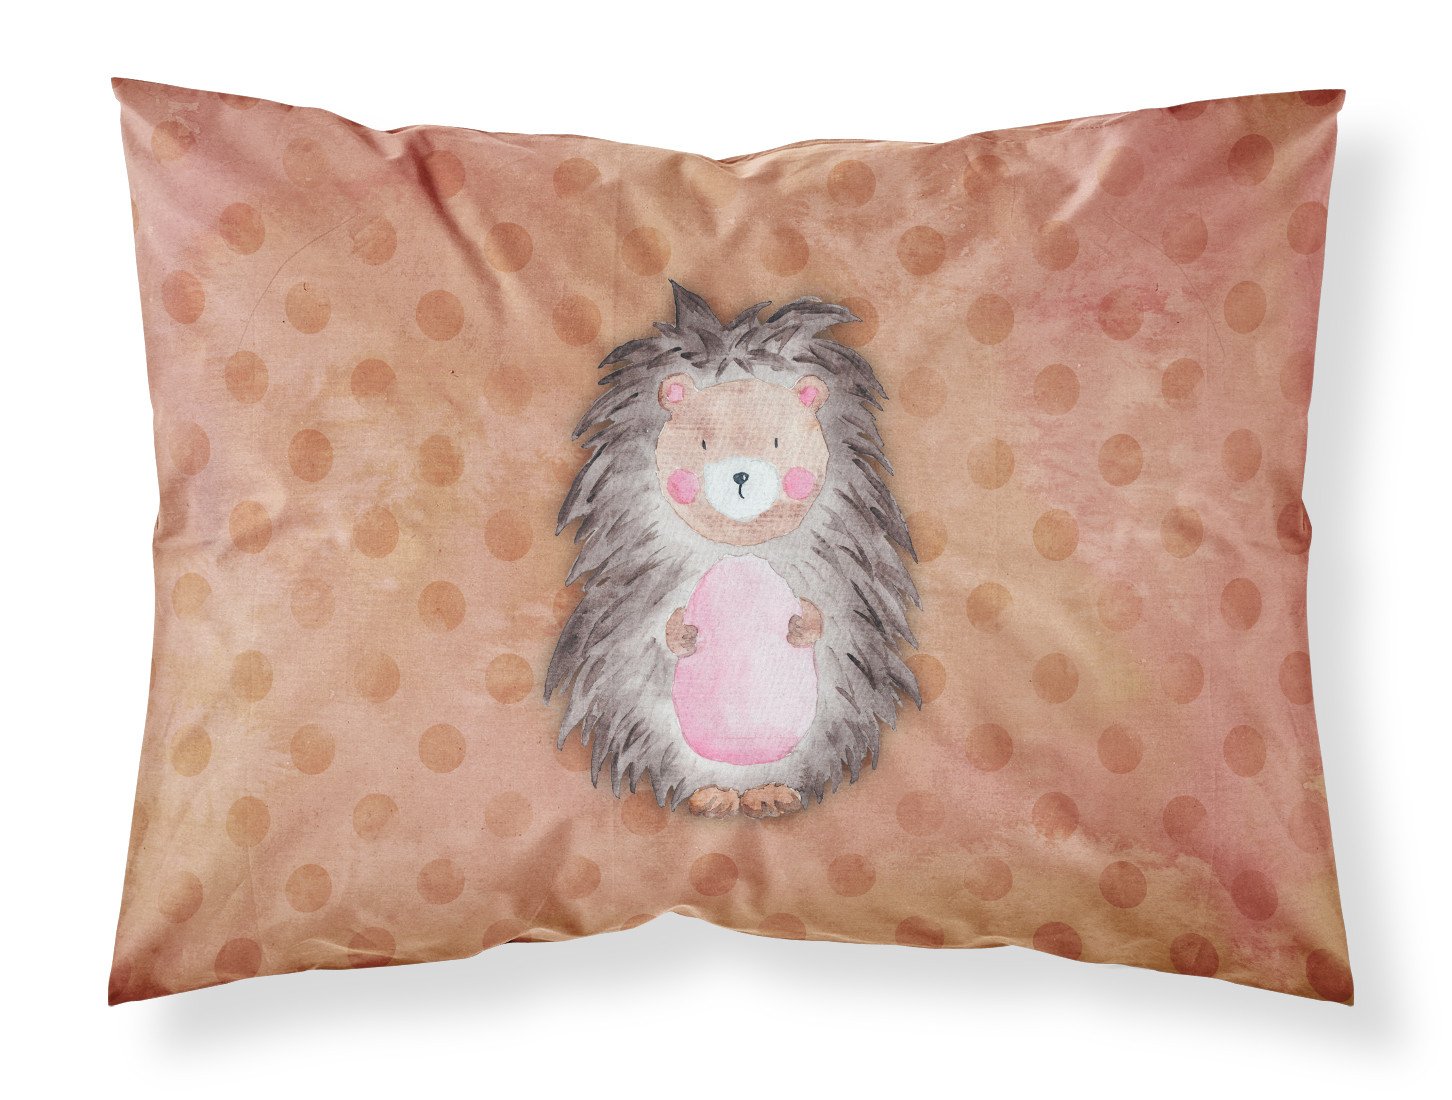 Polkadot Hedgehog Watercolor Fabric Standard Pillowcase BB7378PILLOWCASE by Caroline's Treasures